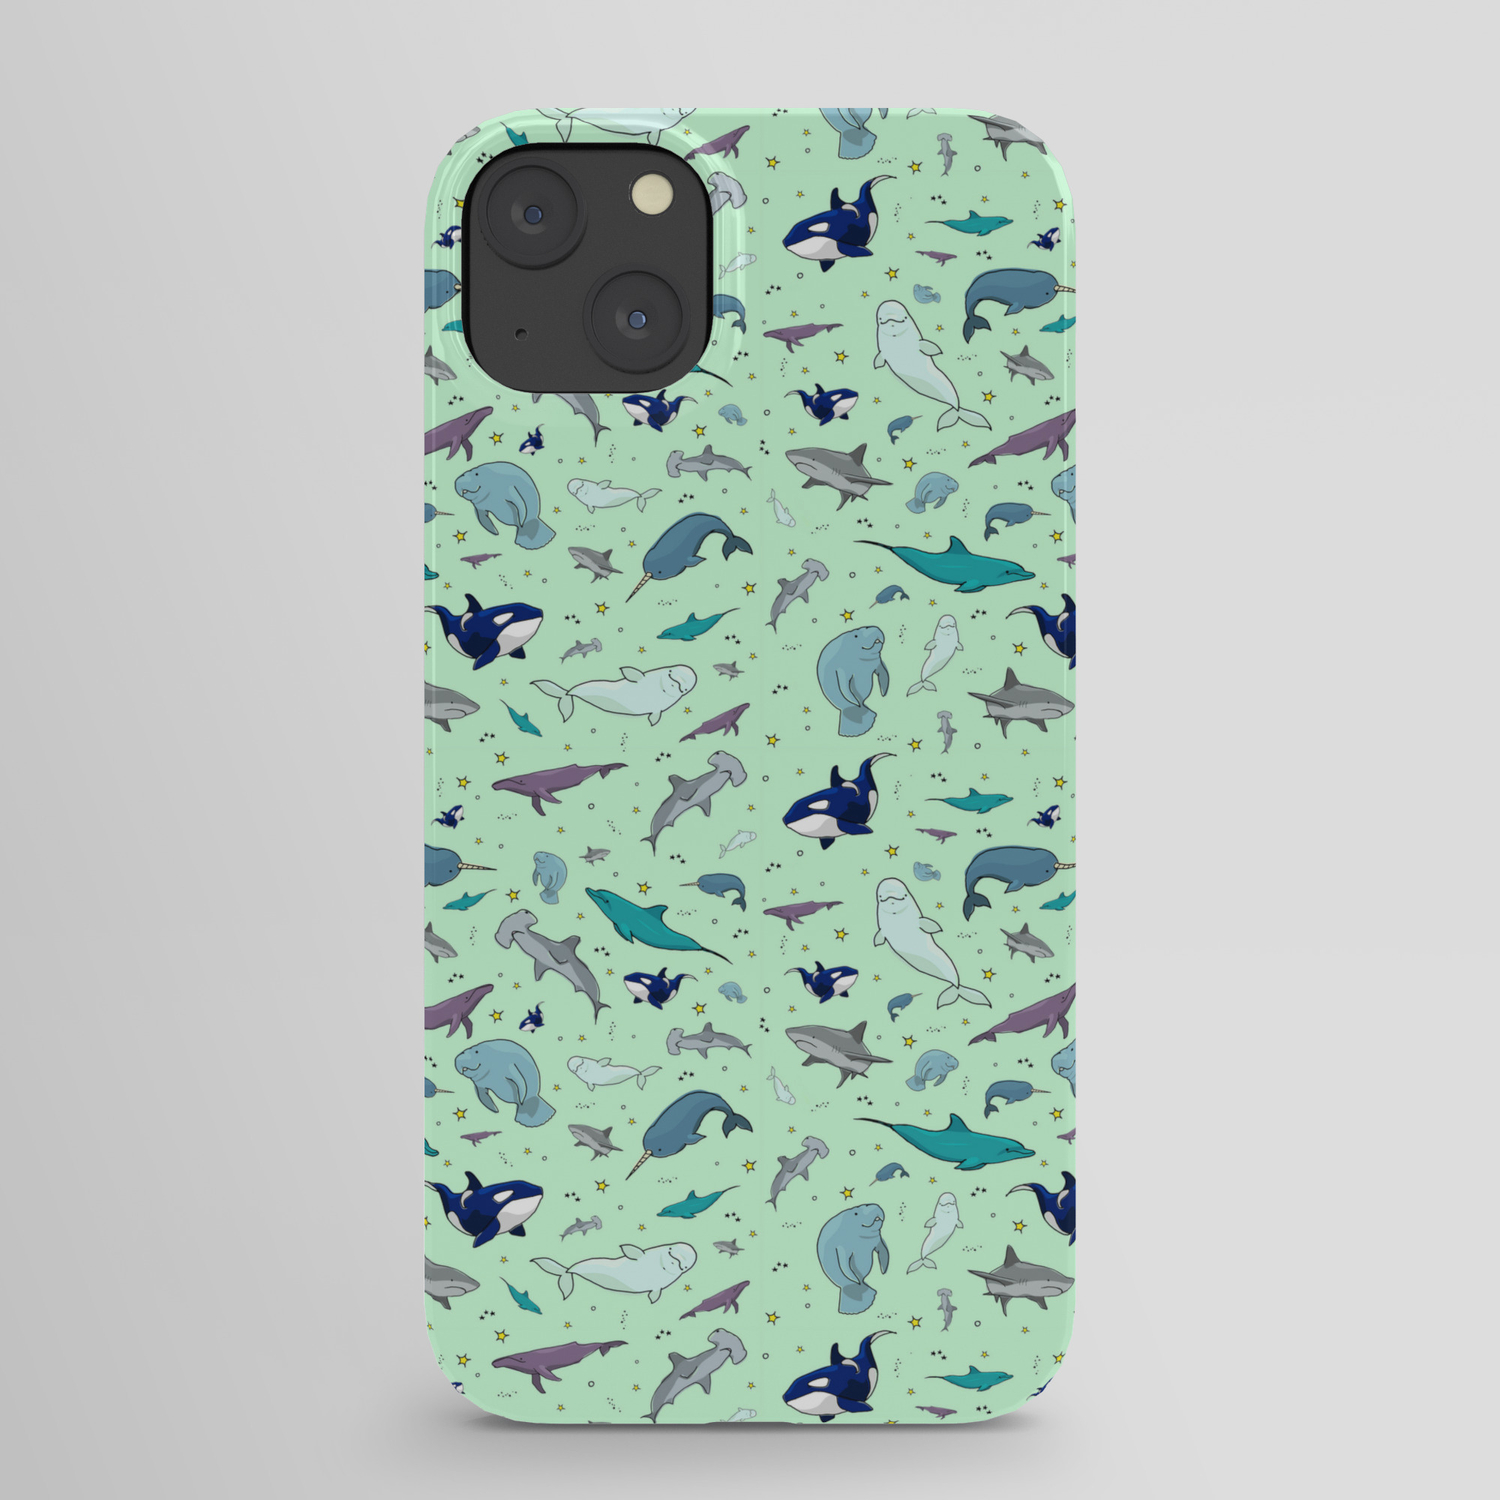 Sea Animals iPhone Case by Nemki | Society6